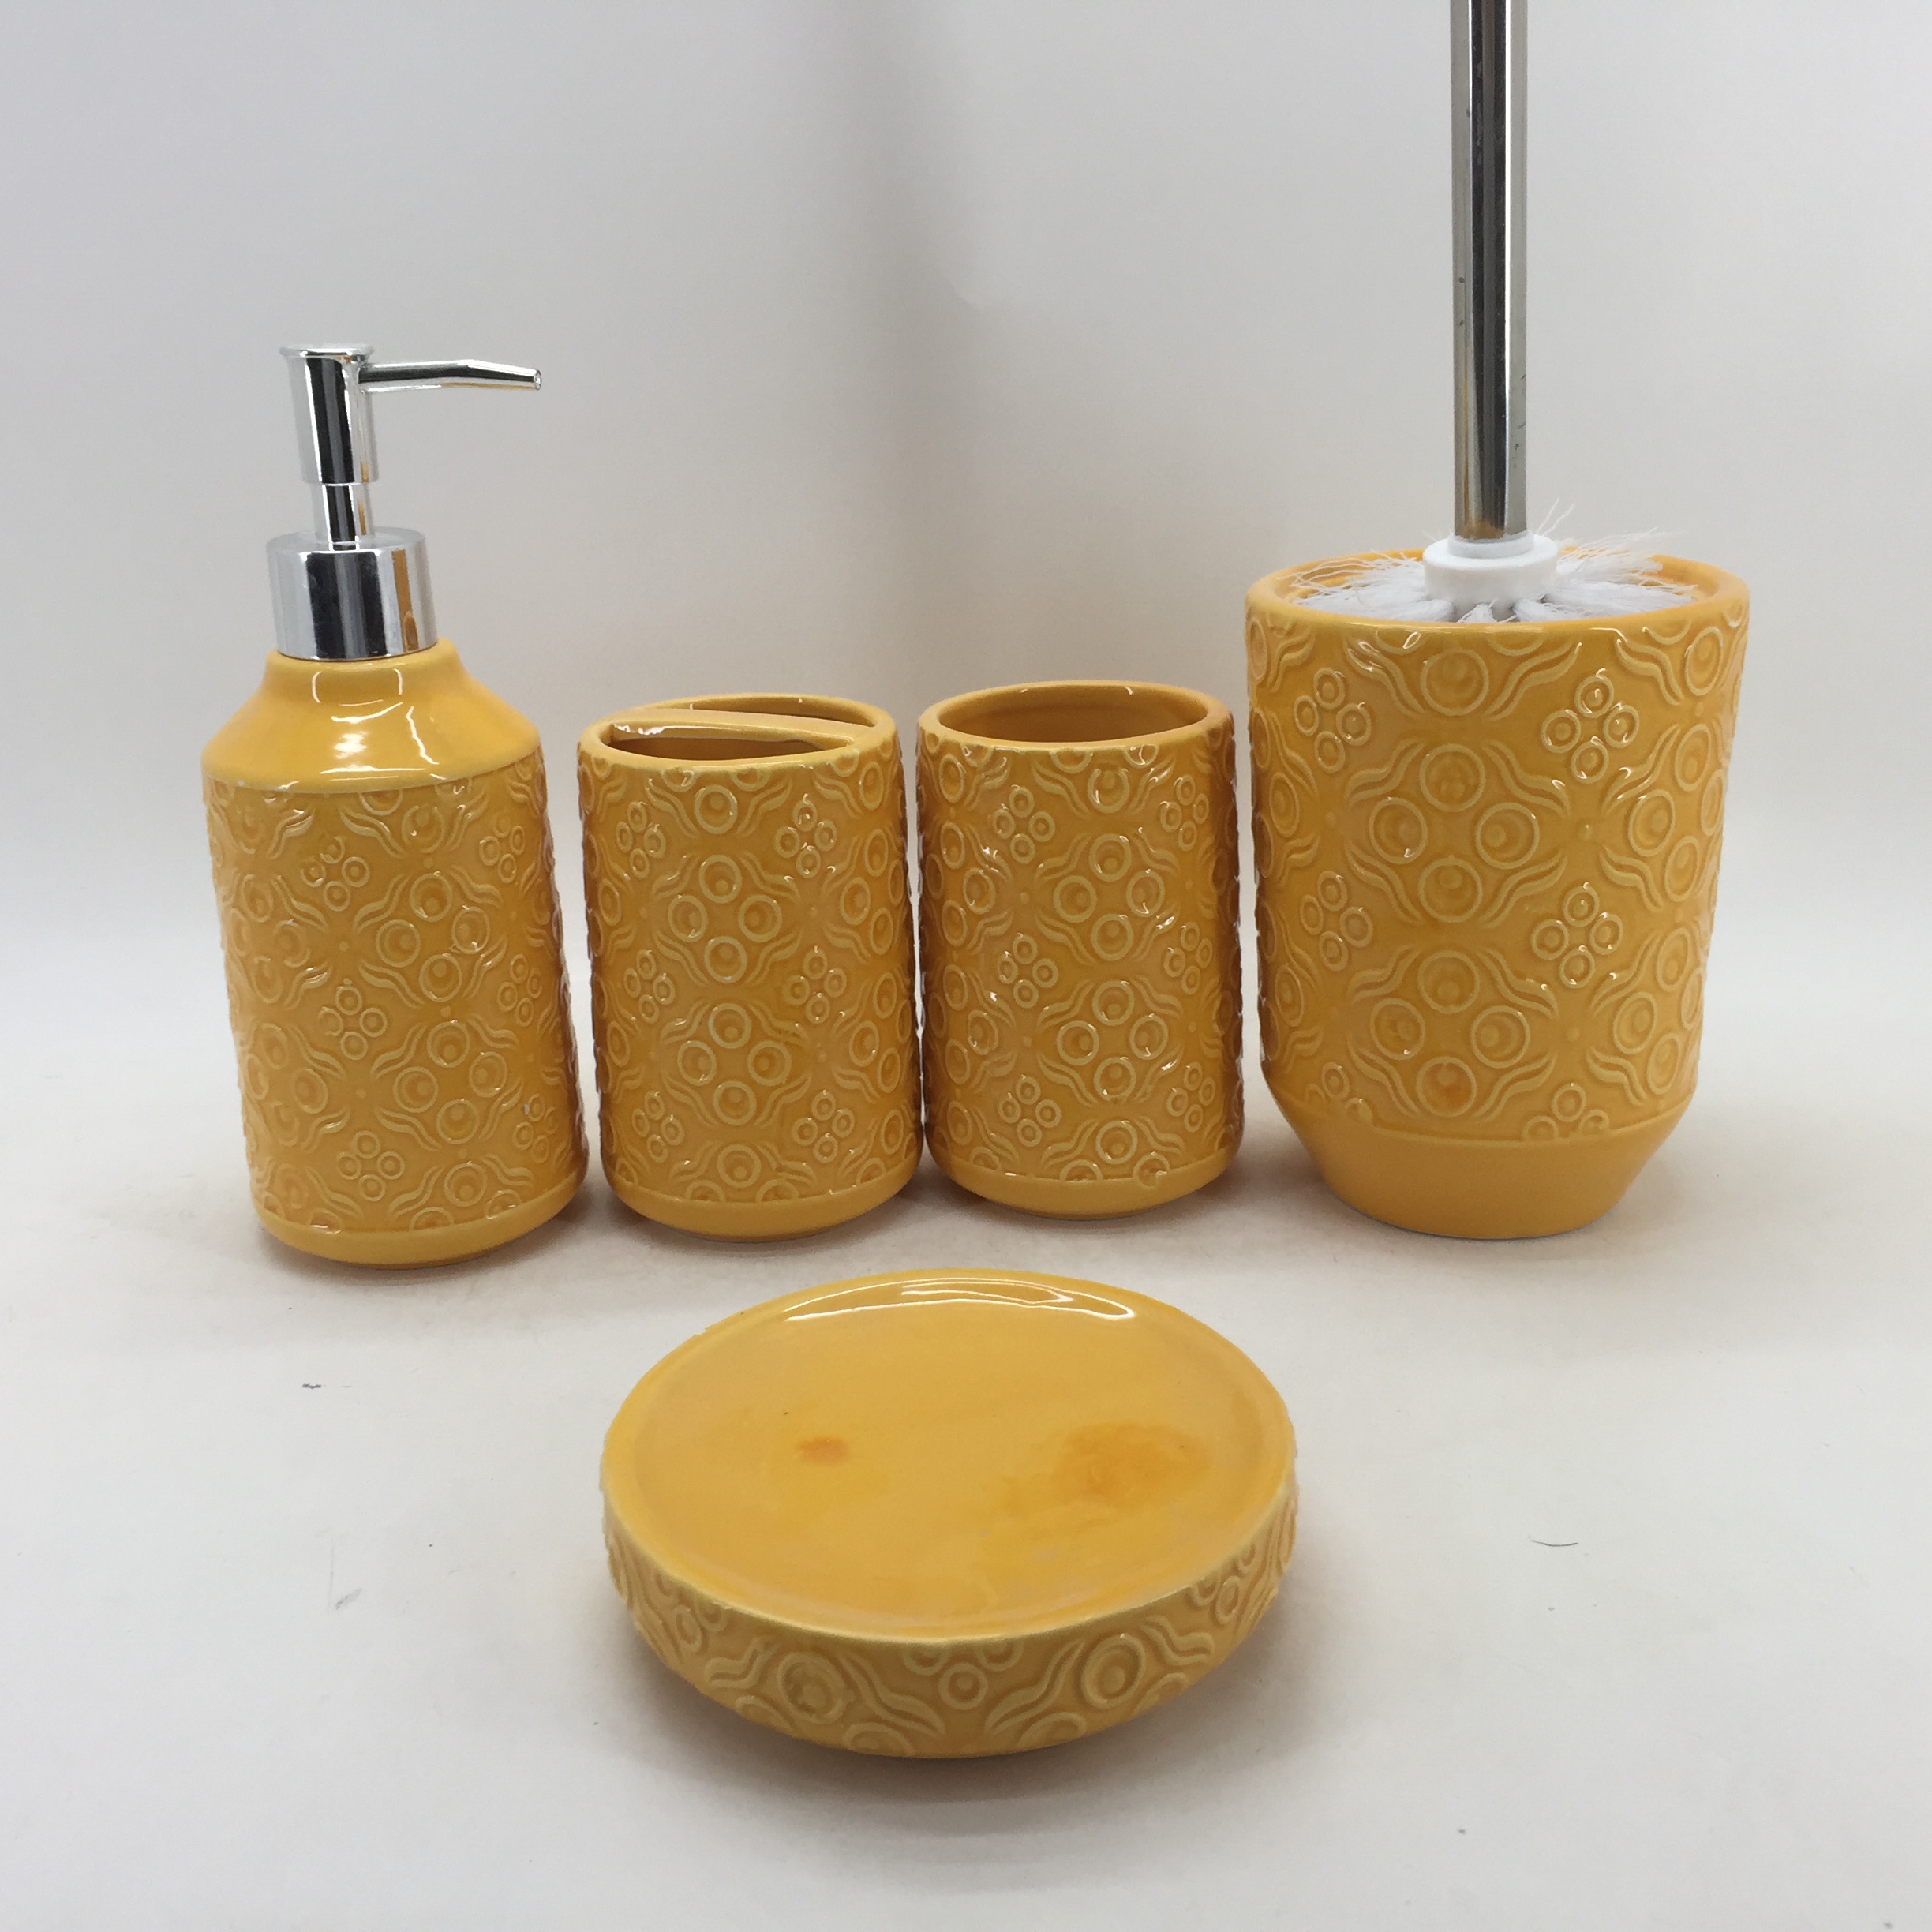 Handmade 5 Piece Ceramic Bathroom Accessories Set